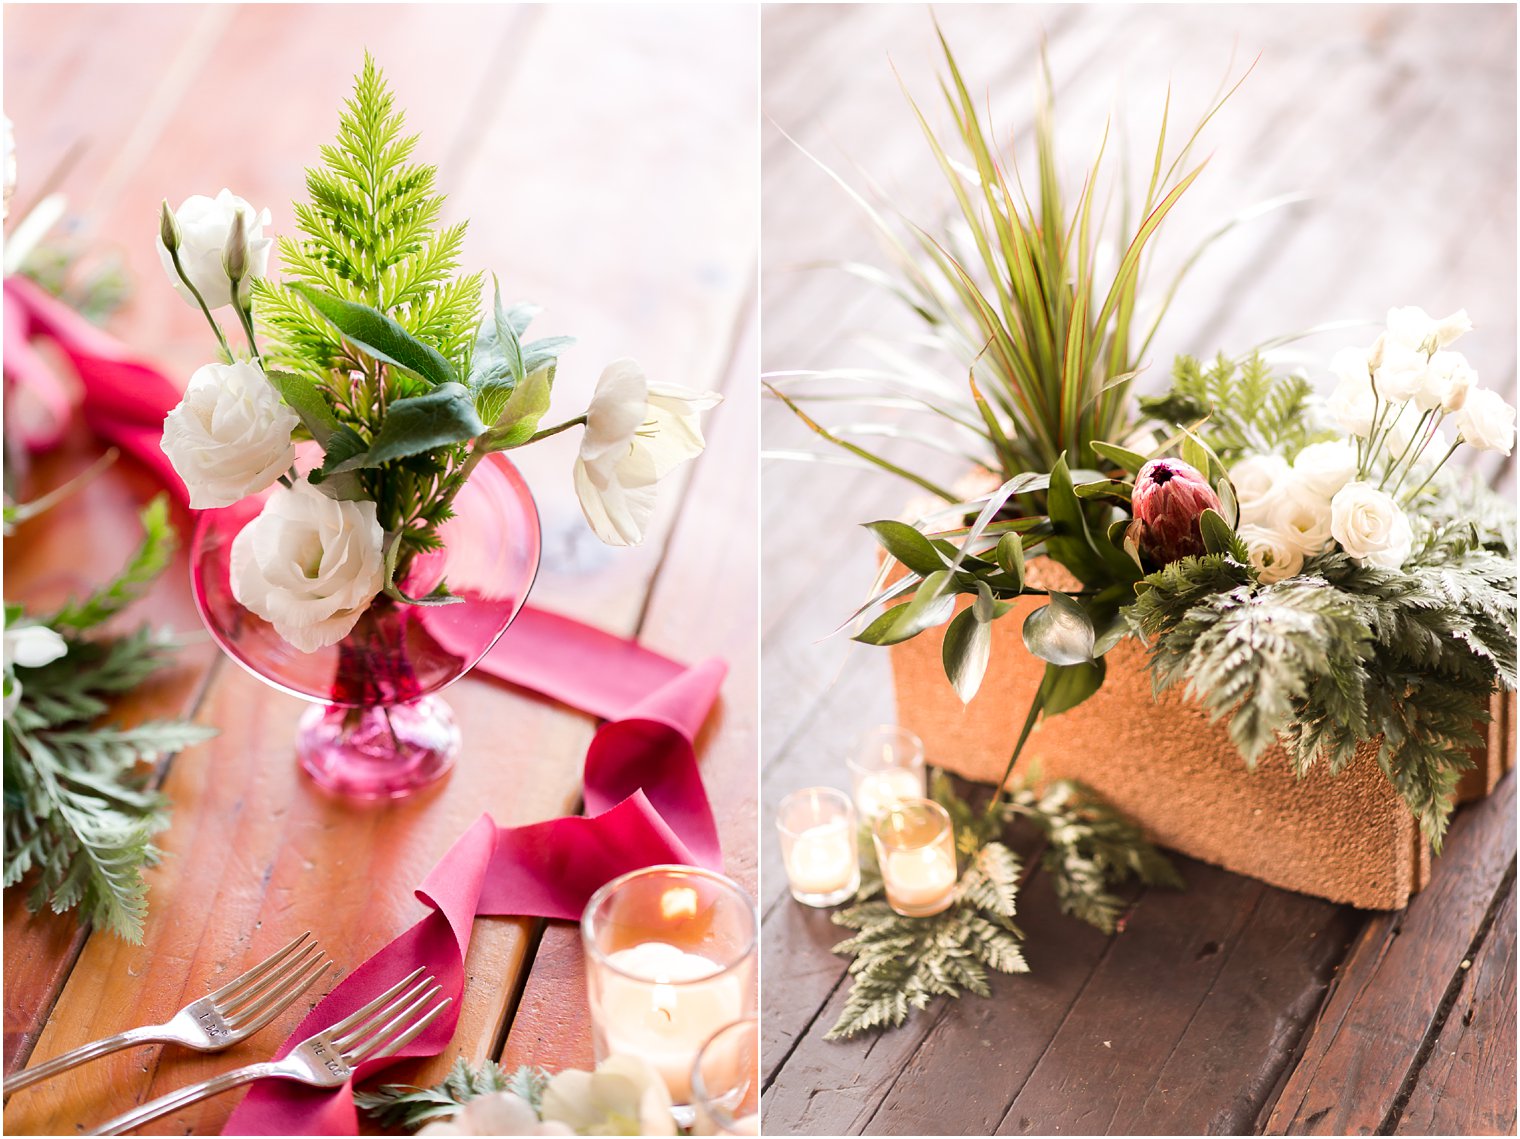 Floral arrangements with pink protea